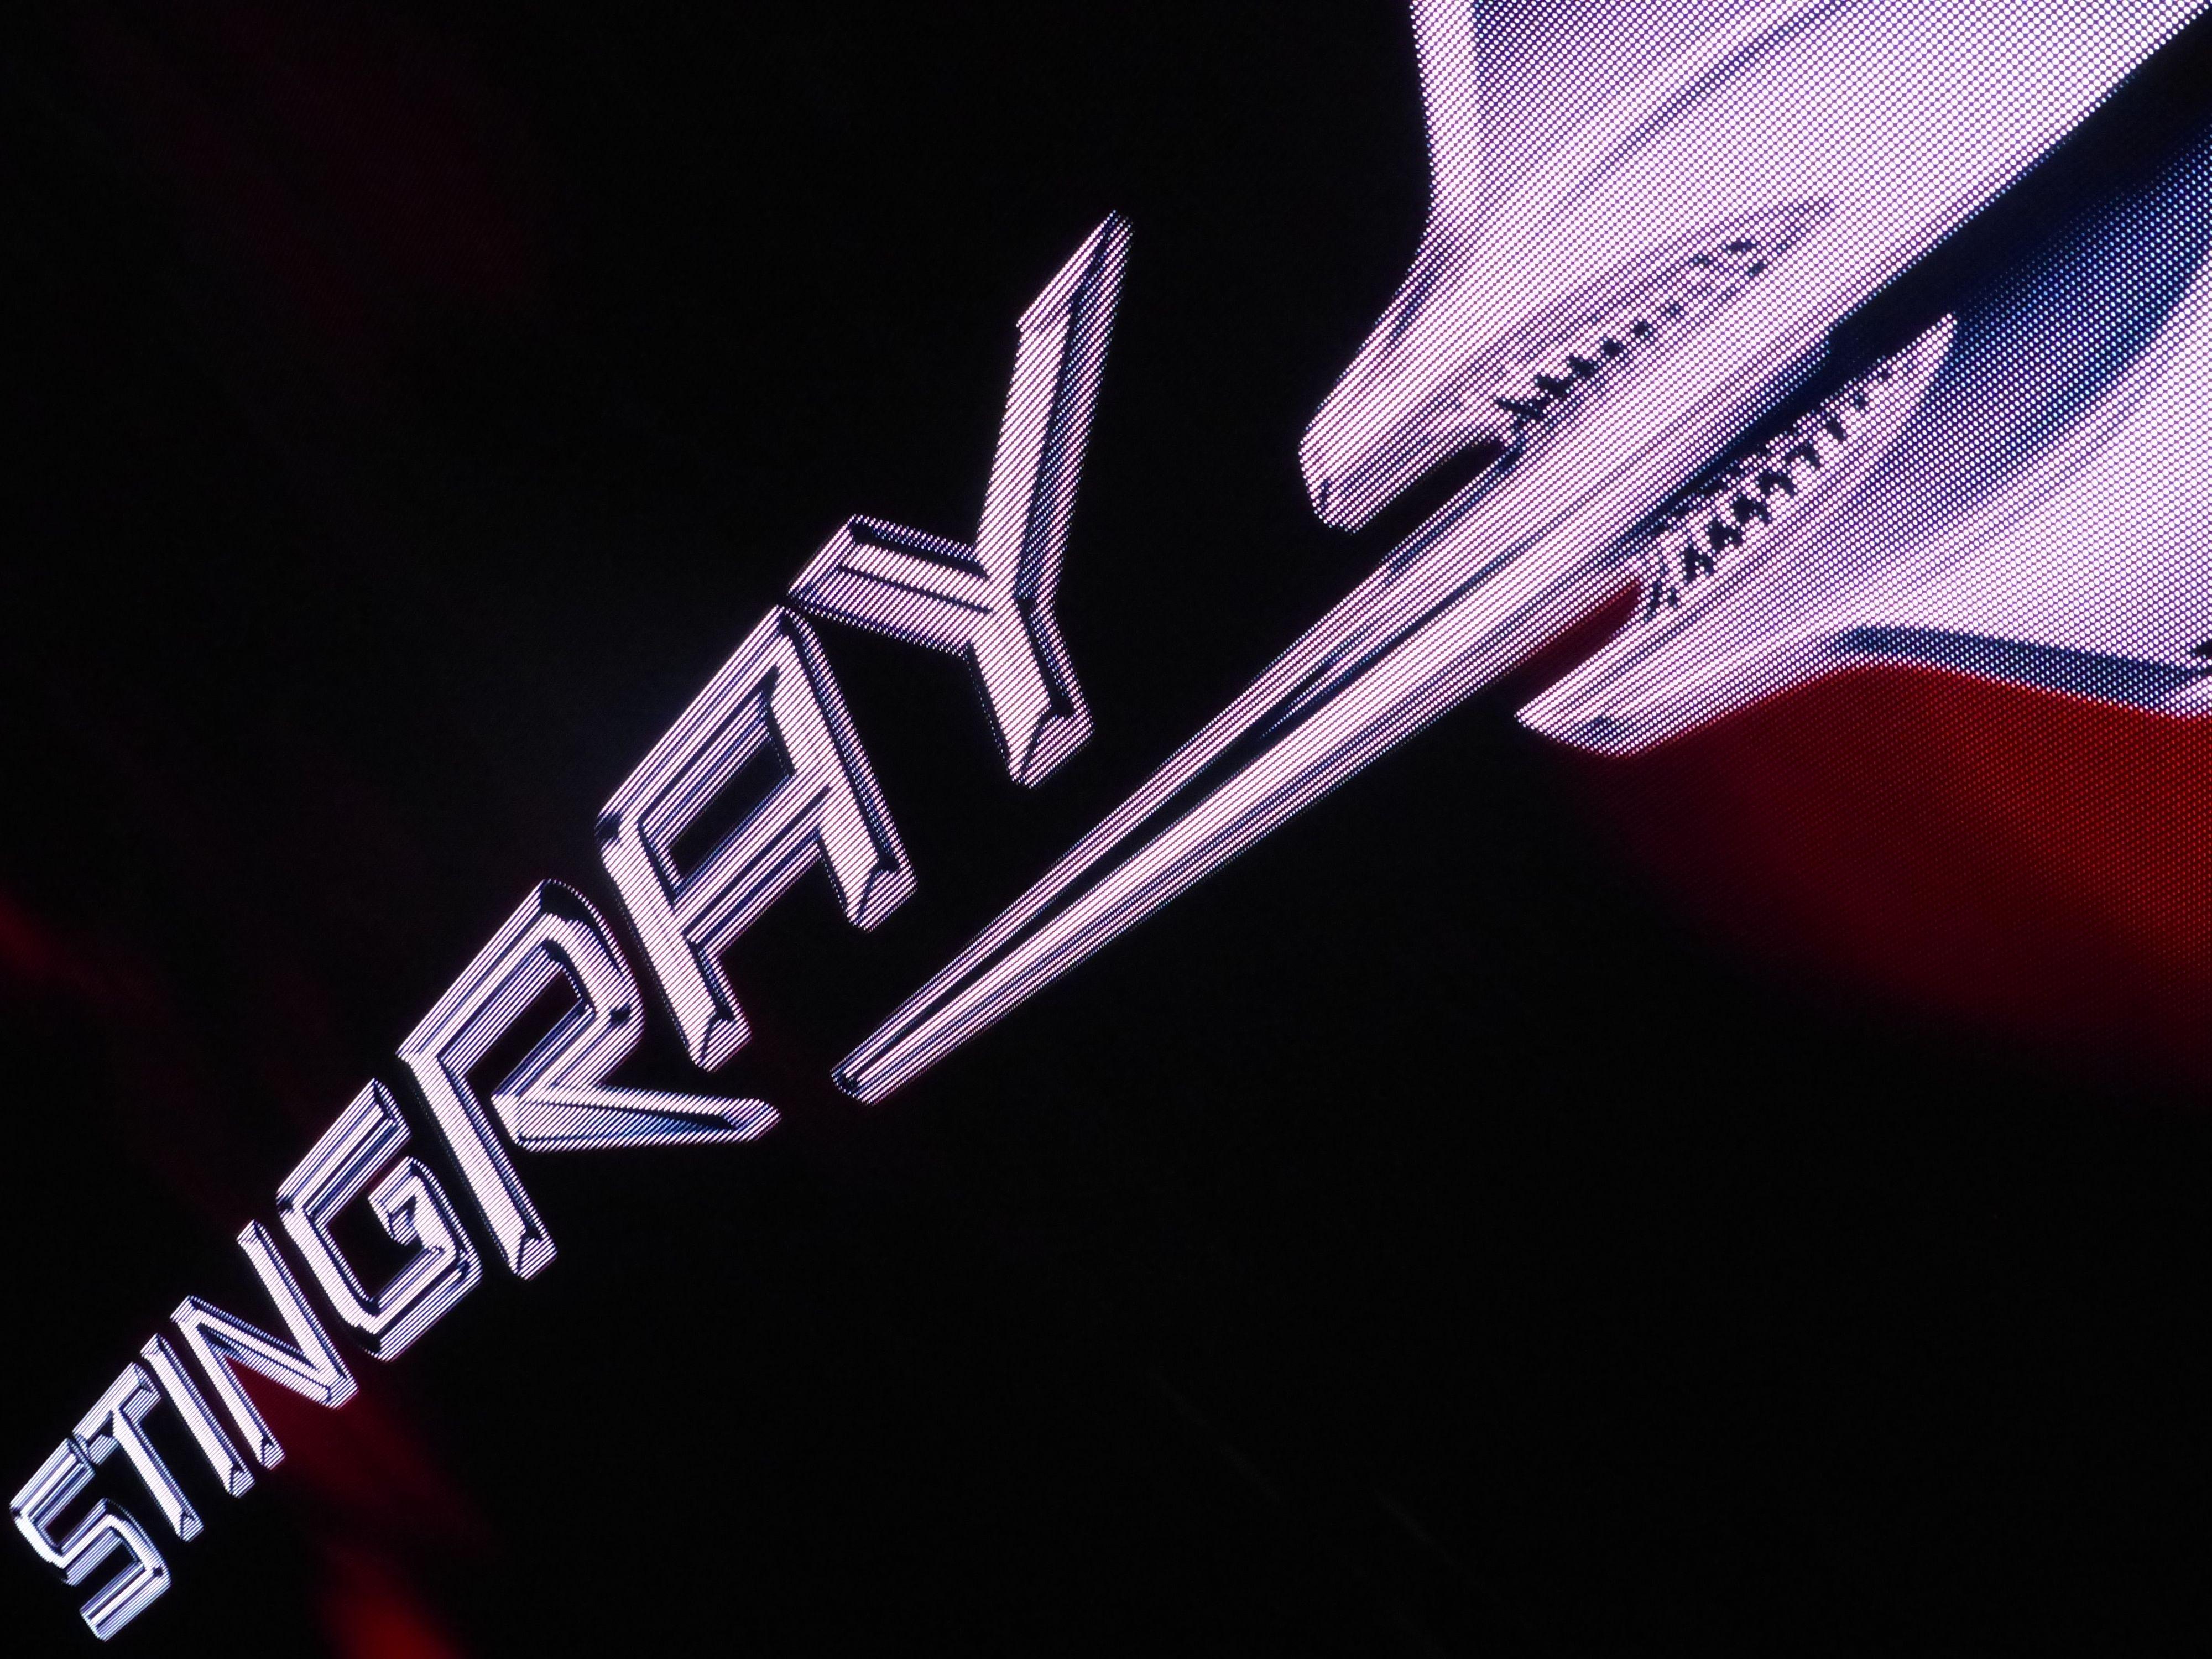 Chevy Corvette Stingray Logo - Watch The 2014 Chevrolet C7 Corvette Stingray Detroit Auto Show Debut